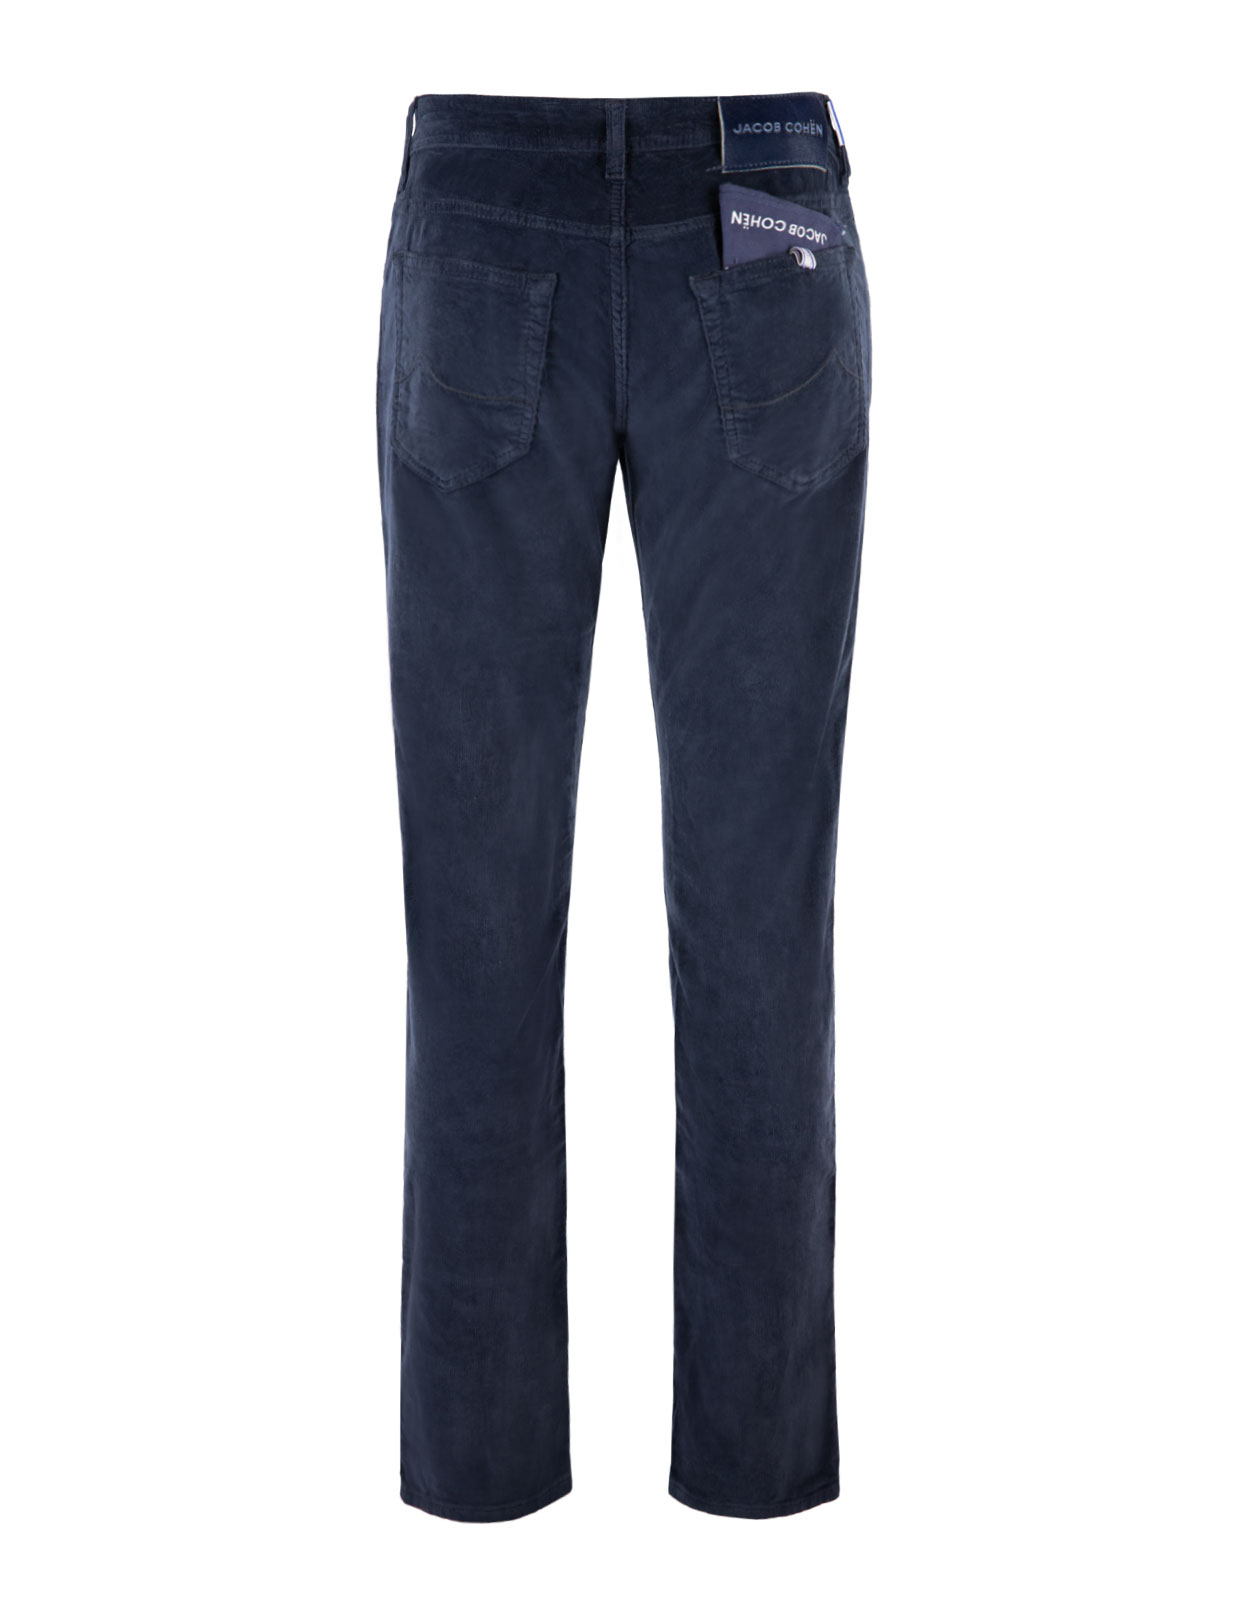 Nick J622 Jeans Cord Stretch Dark Blue